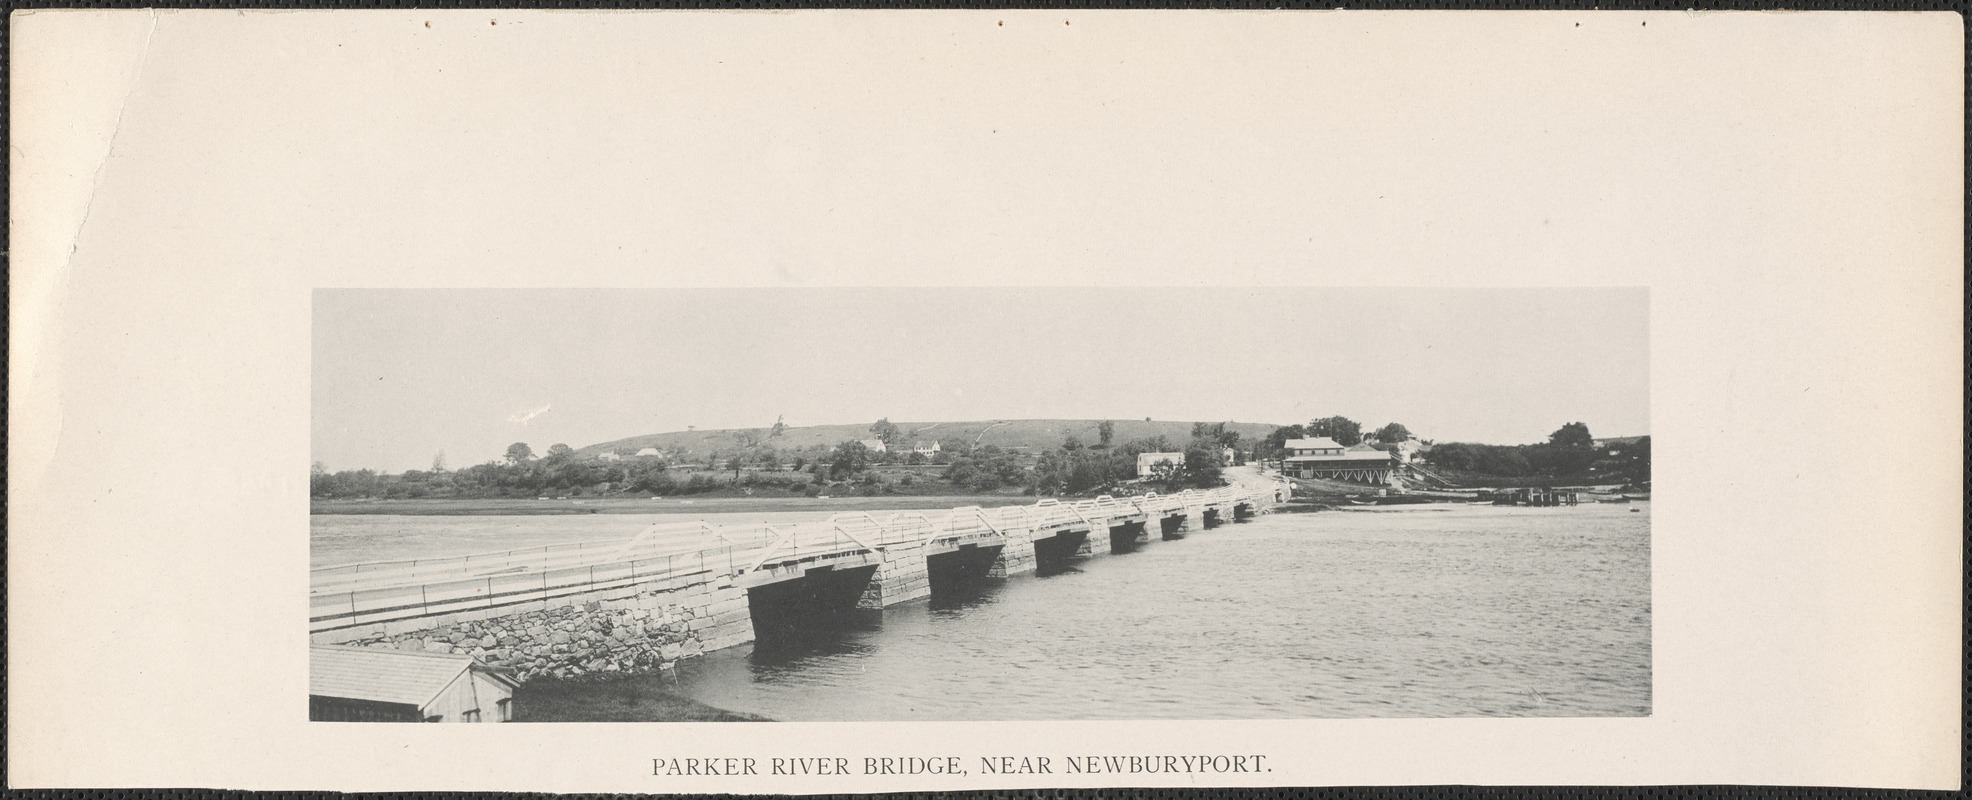 Parker River Bridge, near Newburyport